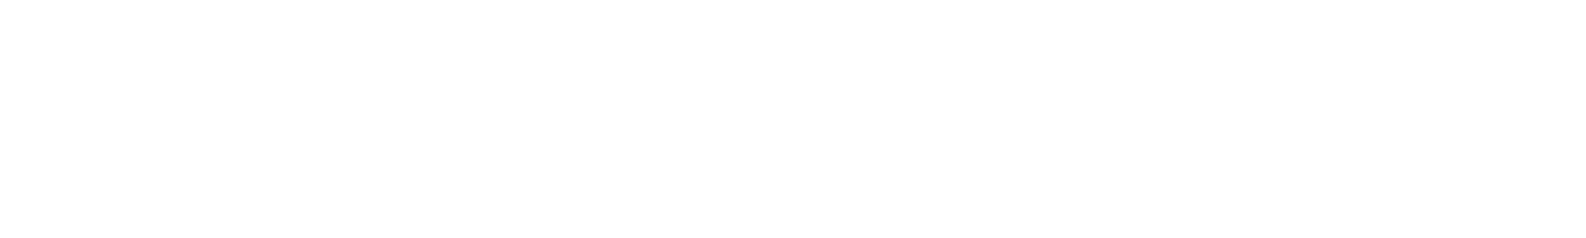 Nordic Paper logo large for dark backgrounds (transparent PNG)